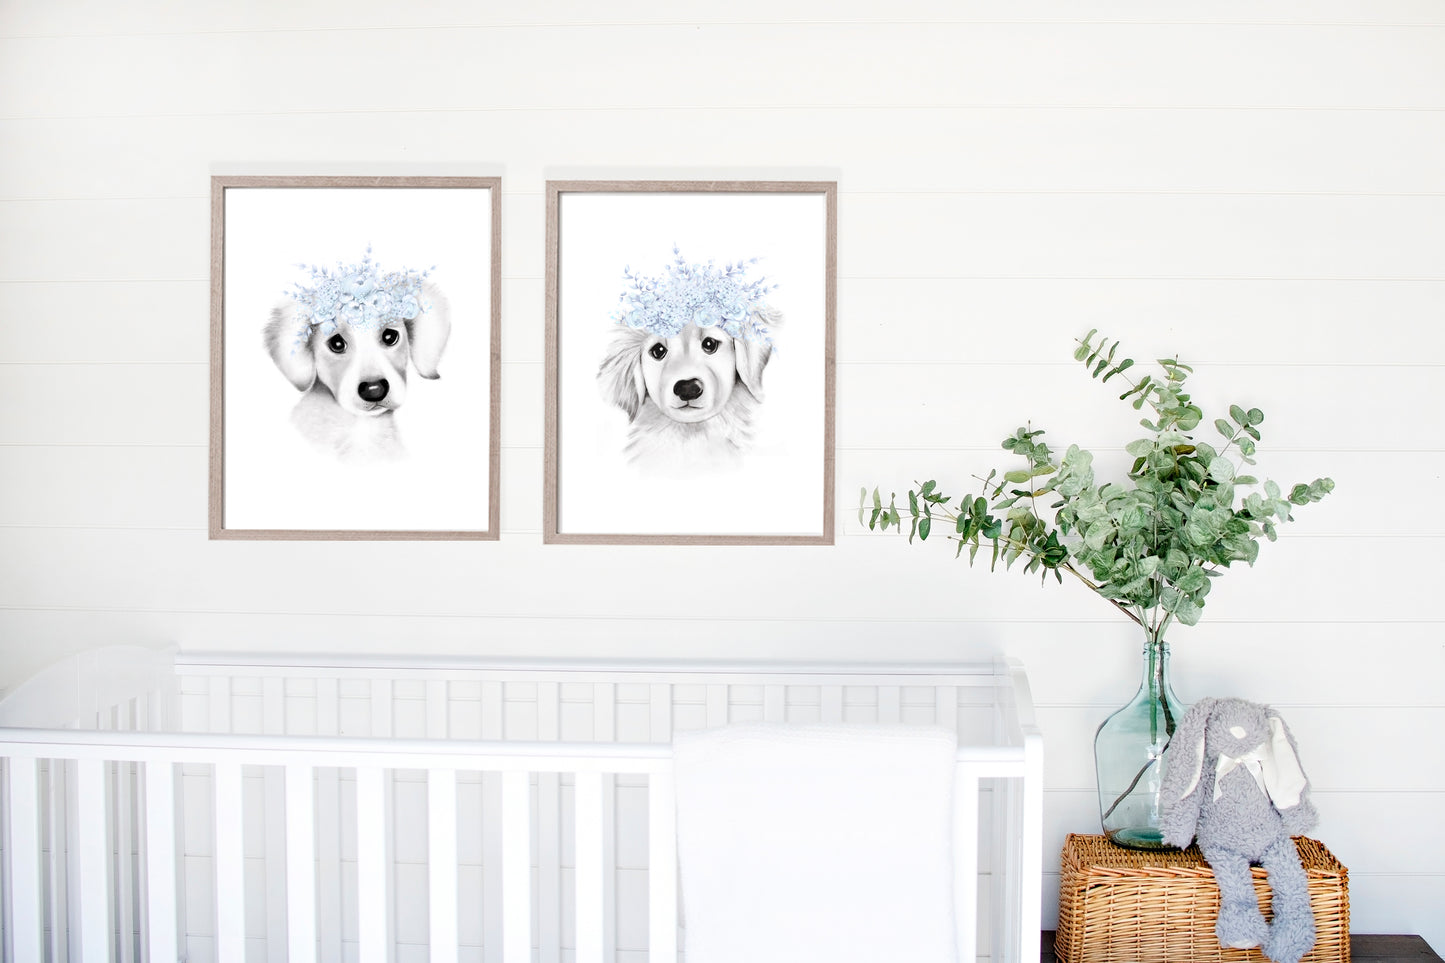 Puppies with Flower Crown Prints - Set of 2 - Studio Q - Art by Nicky Quartermaine Scott